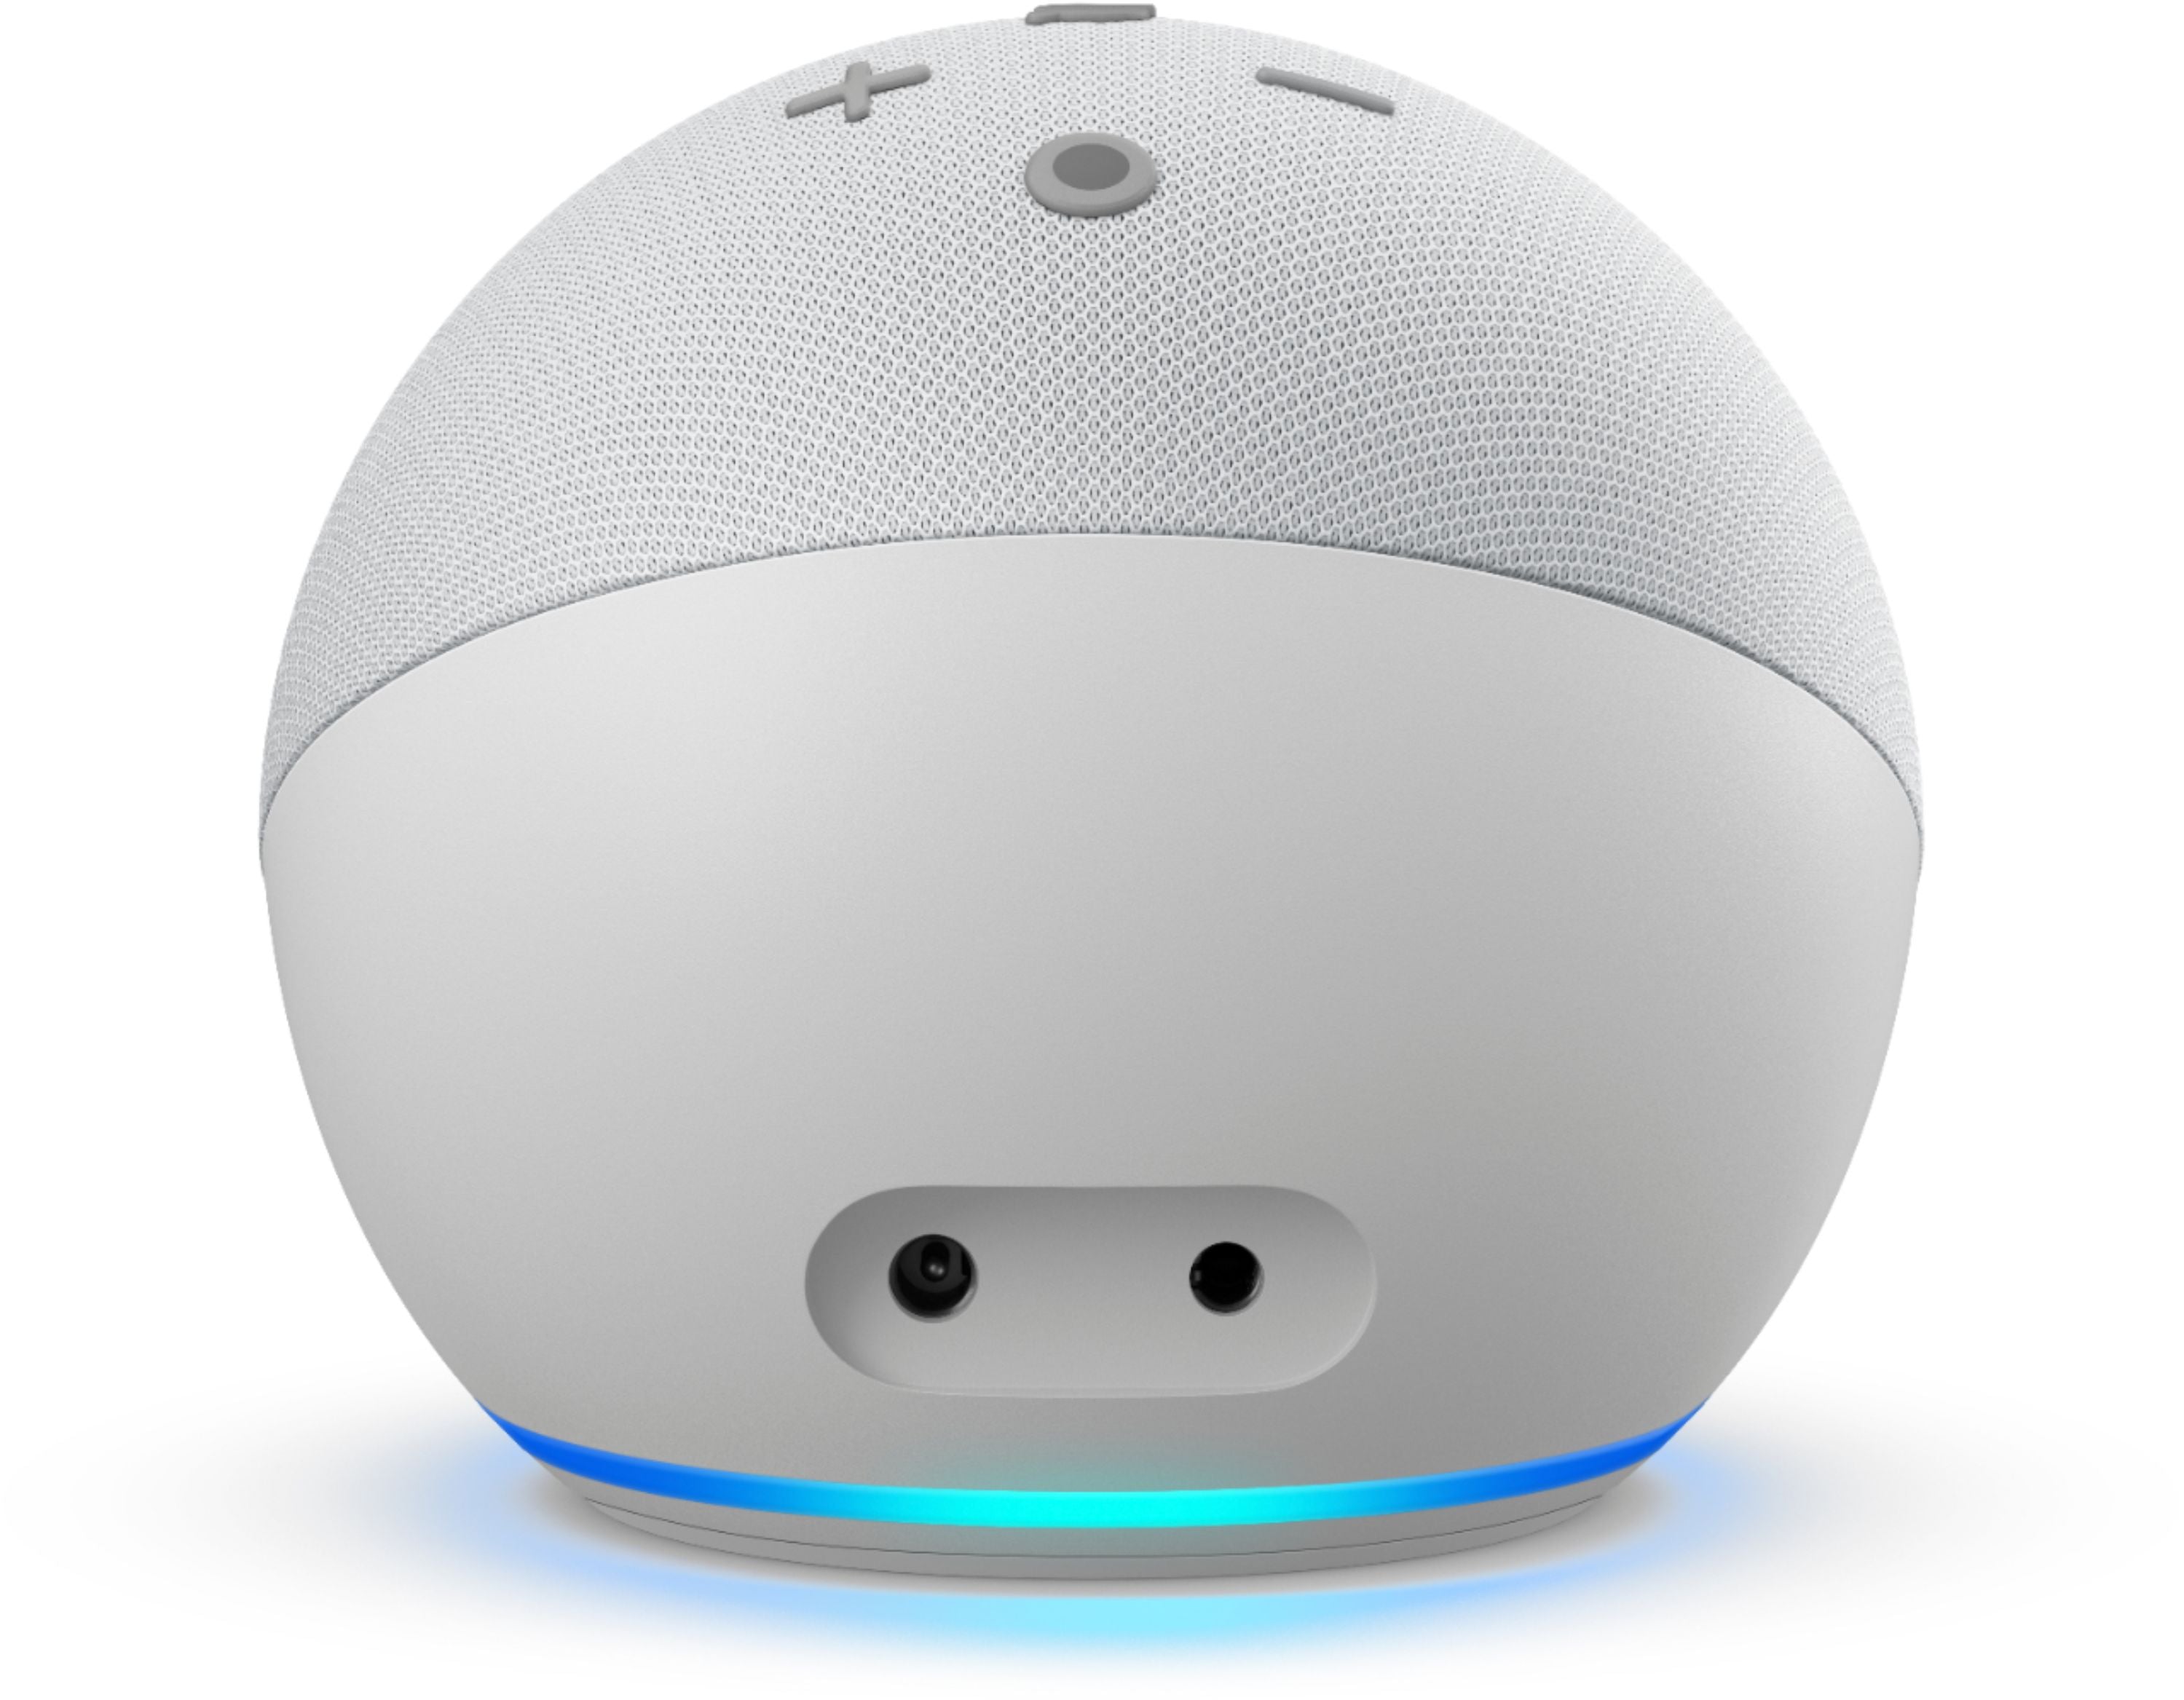 Amazon Echo Dot (4th, White) + Smart Plug + Cat5 Cable + Batteries Base Bundle